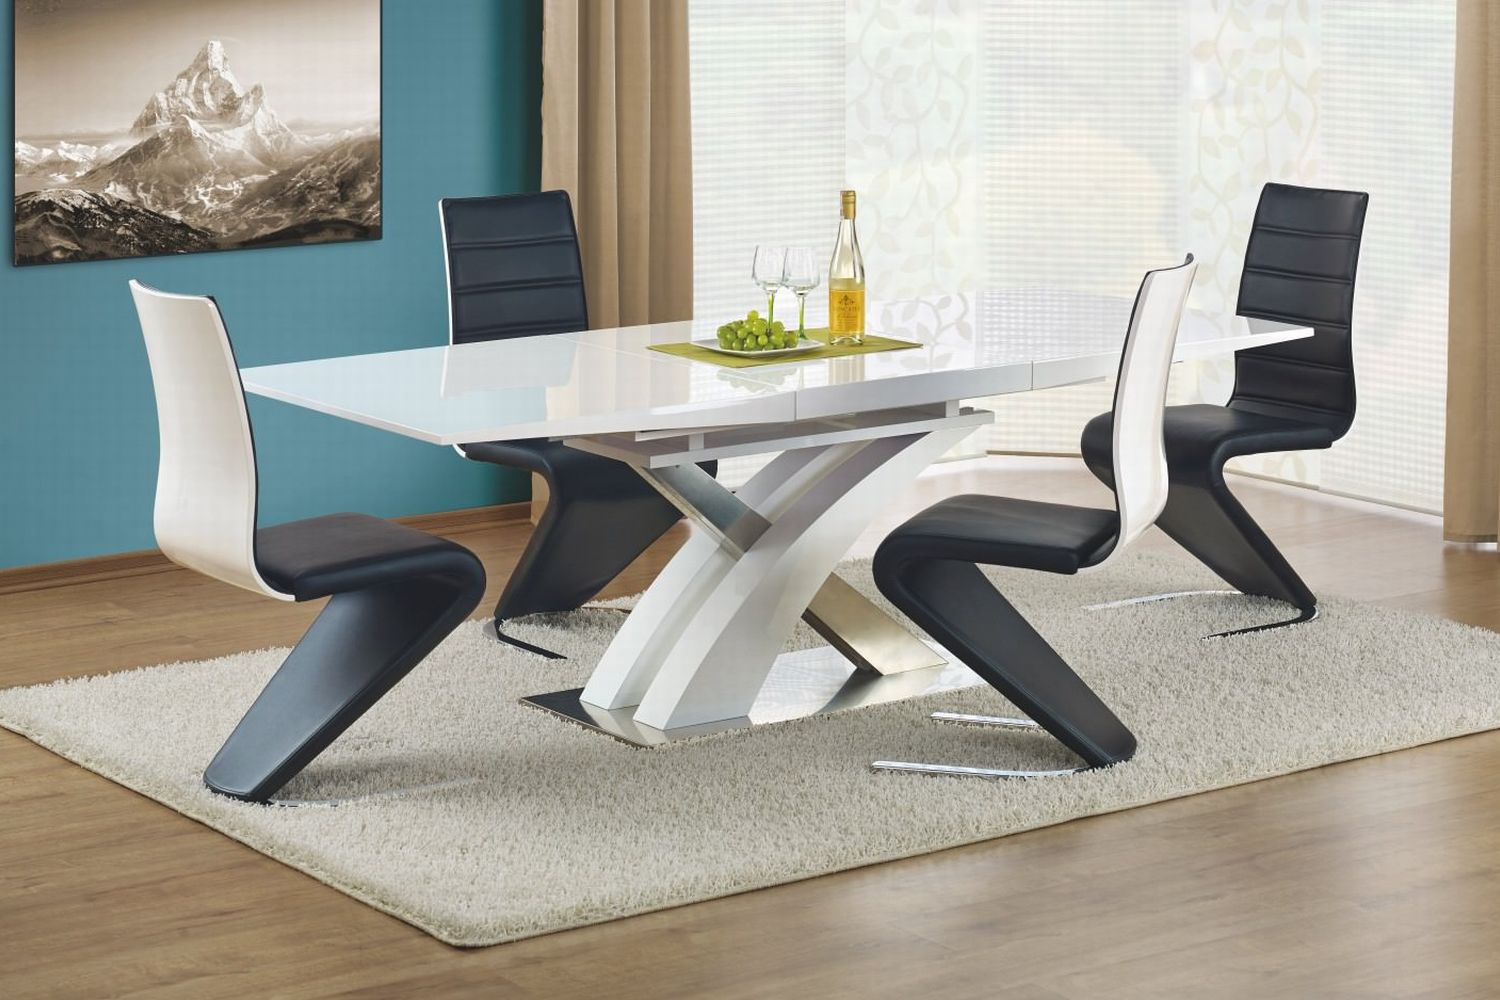 Mifine столик со стульями